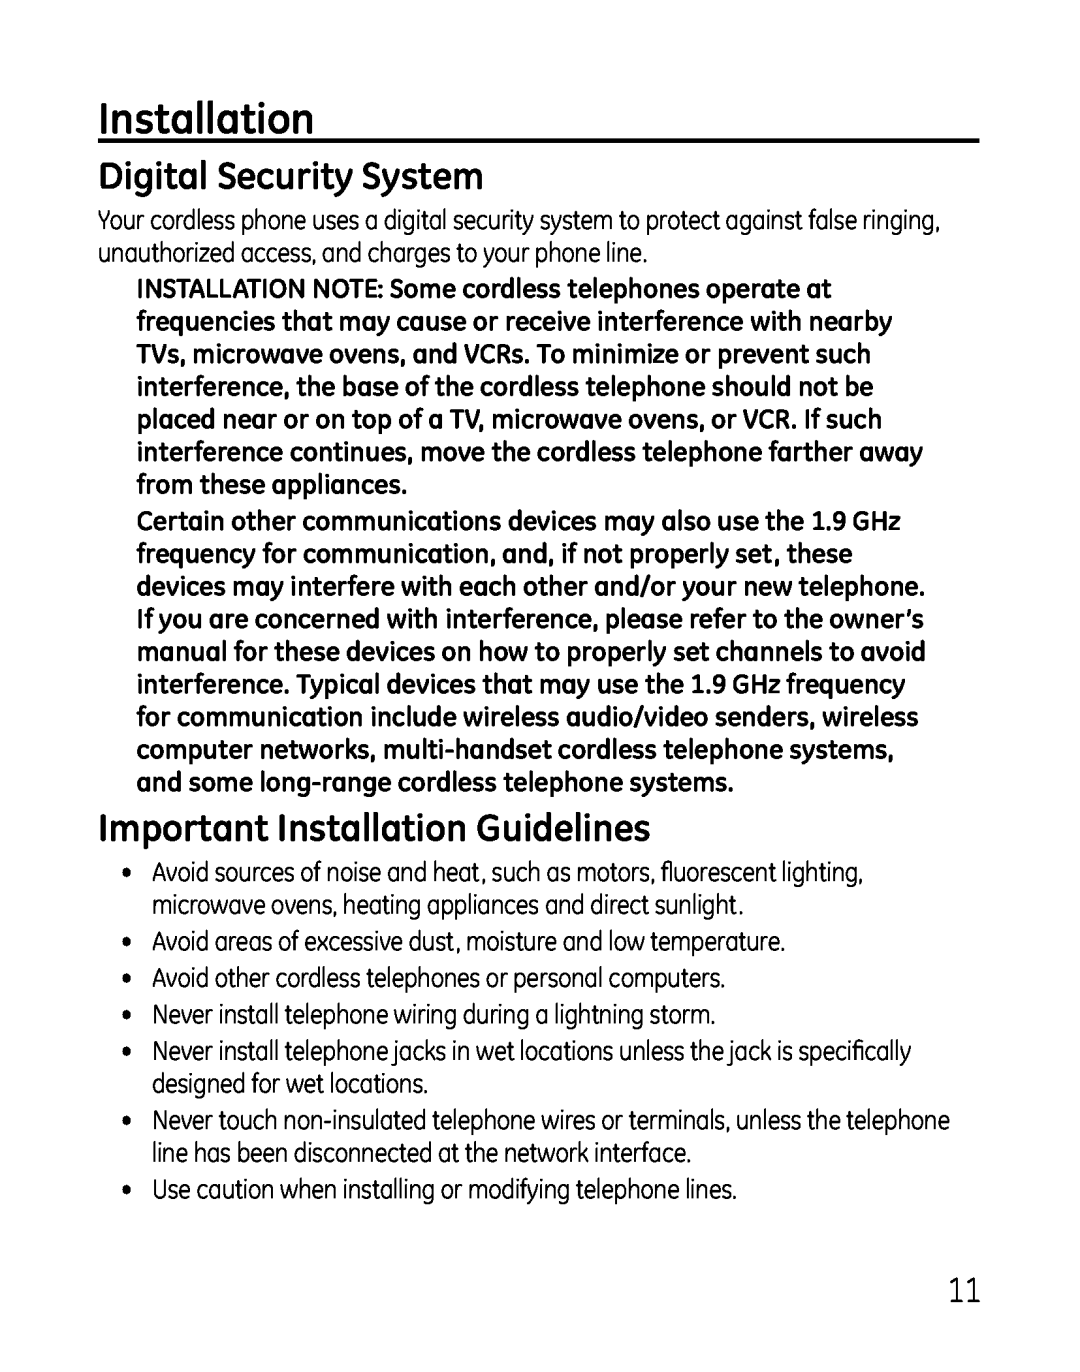 GE 28821xx3, 881, 28821xx4, 28821xx6, 28821xx5, 28821 Series Digital Security System, Important Installation Guidelines 